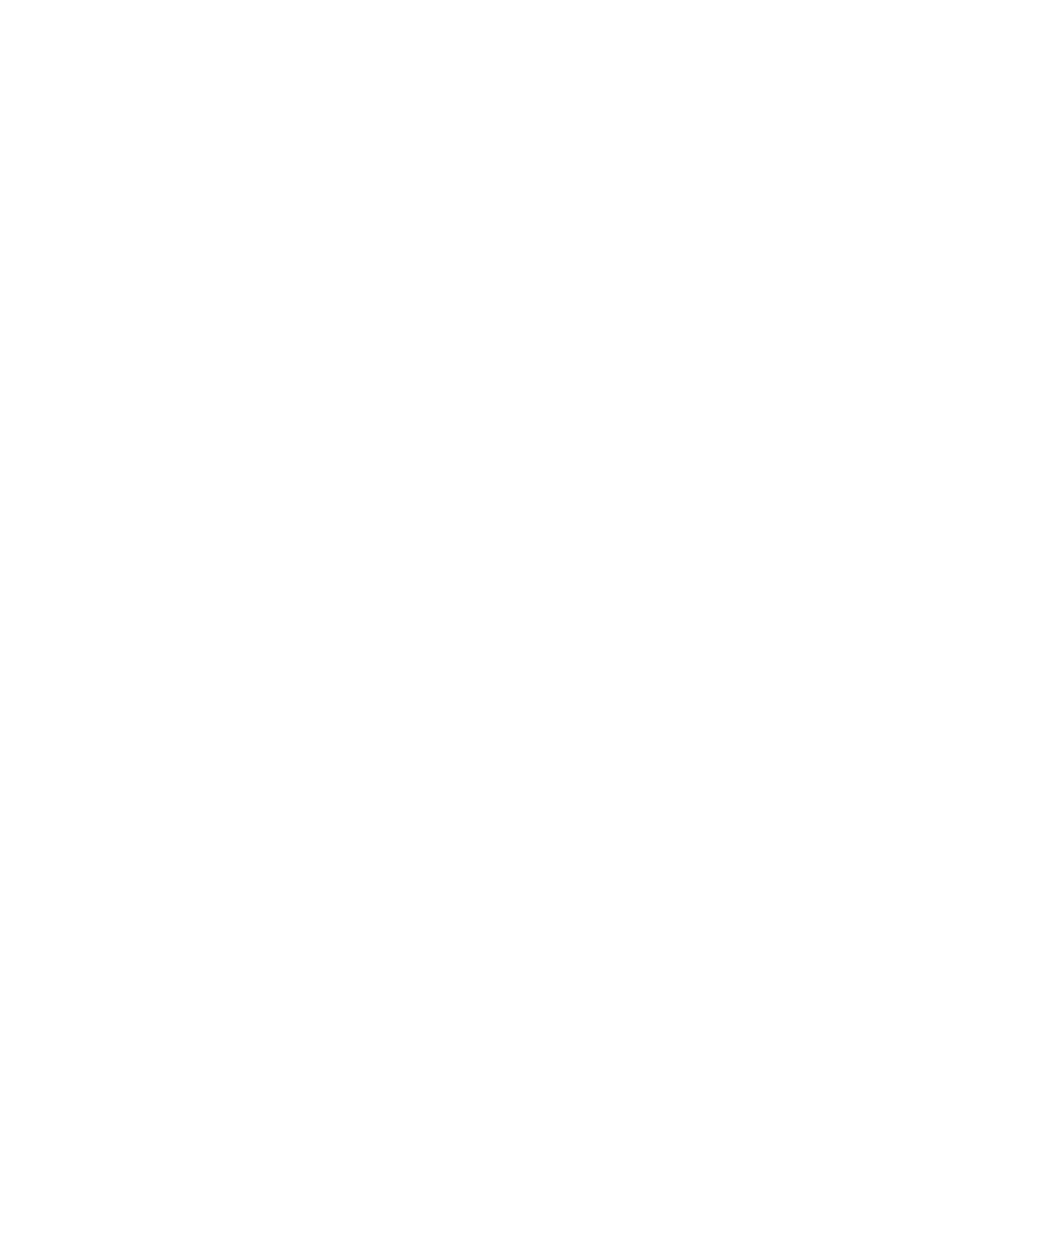 DnD Conveyancing